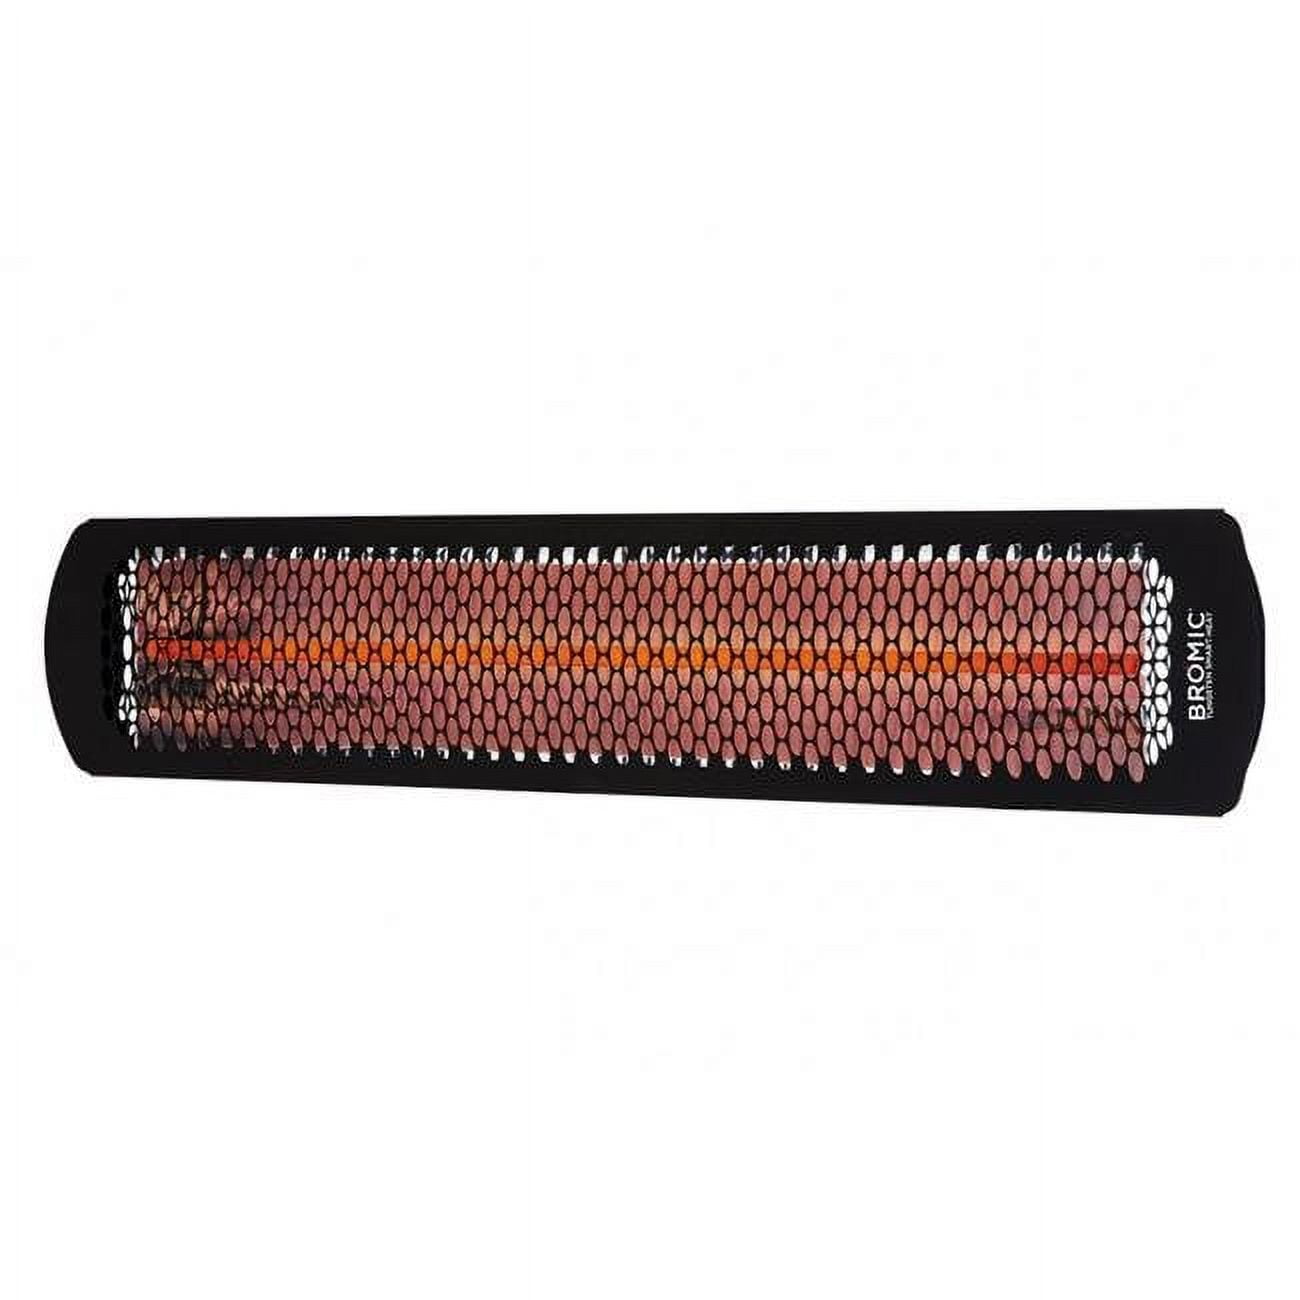 Bromic Bh0420031 3000w Tungsten Smart Heat Electric Outdoor Patio Heater, Black